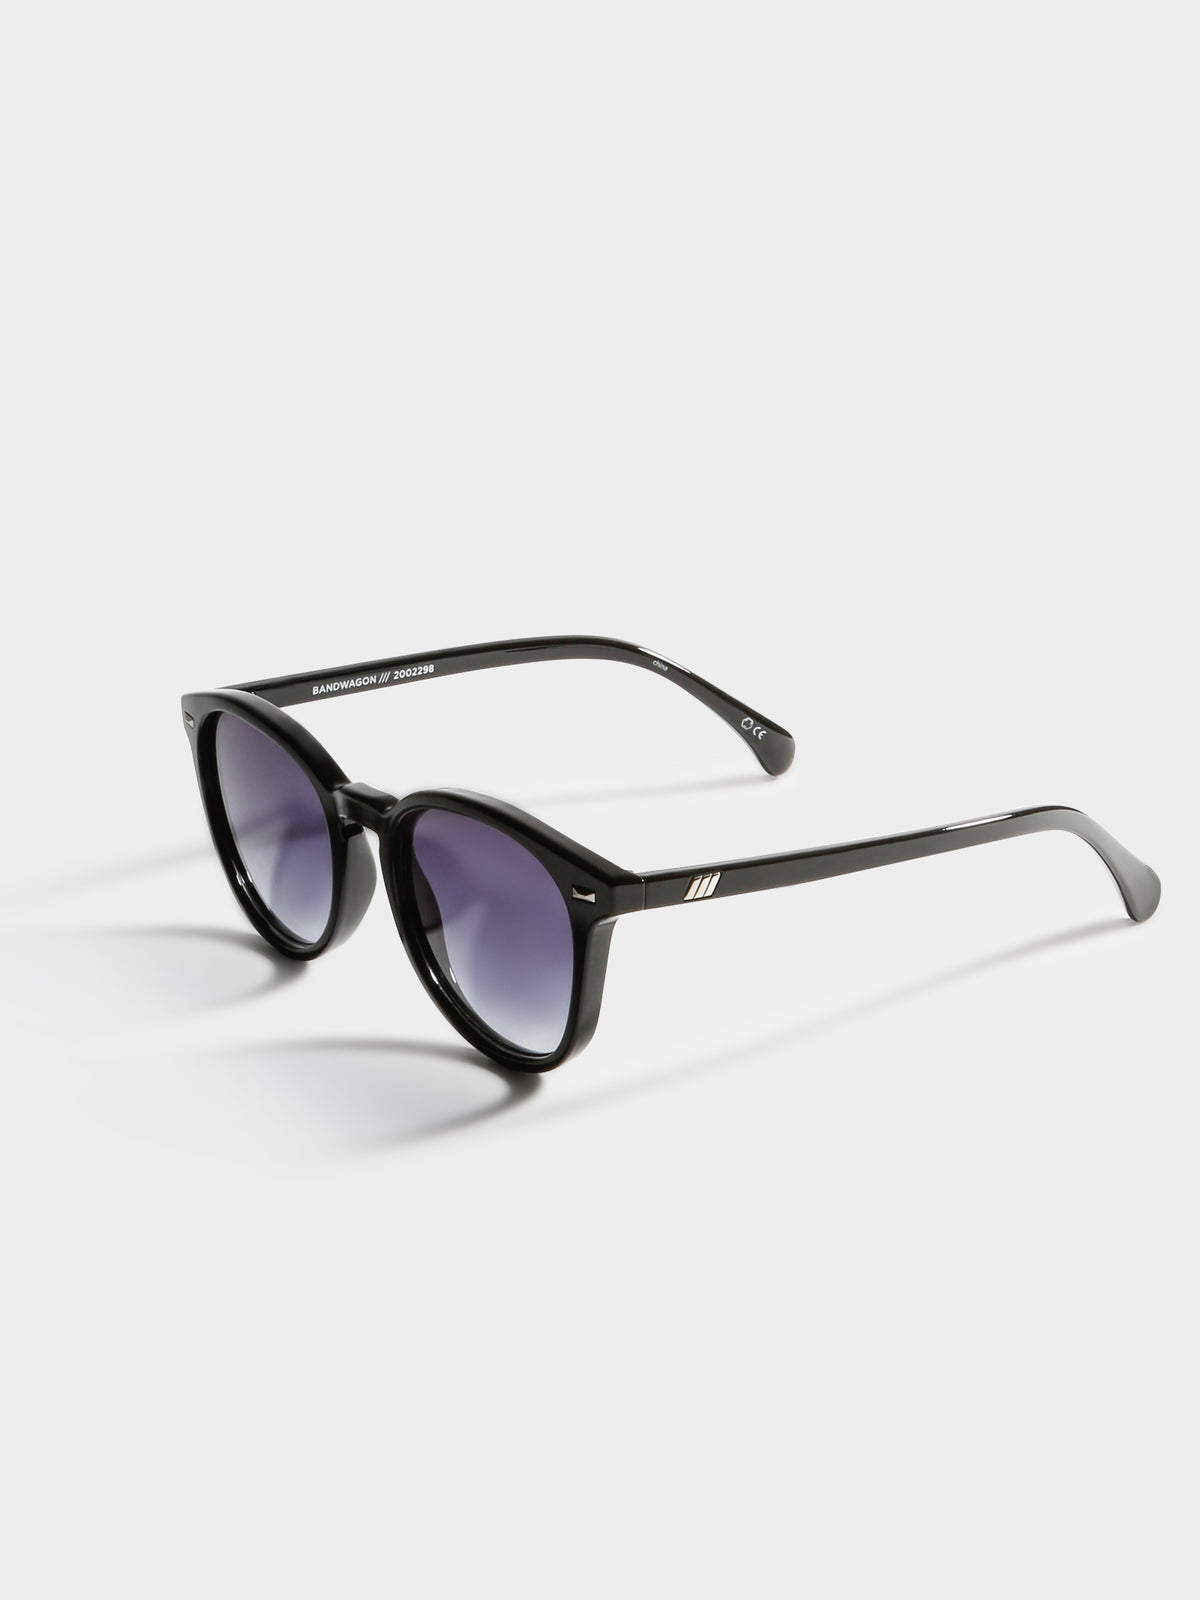 Unisex Bandwagon Sunglasses in Black